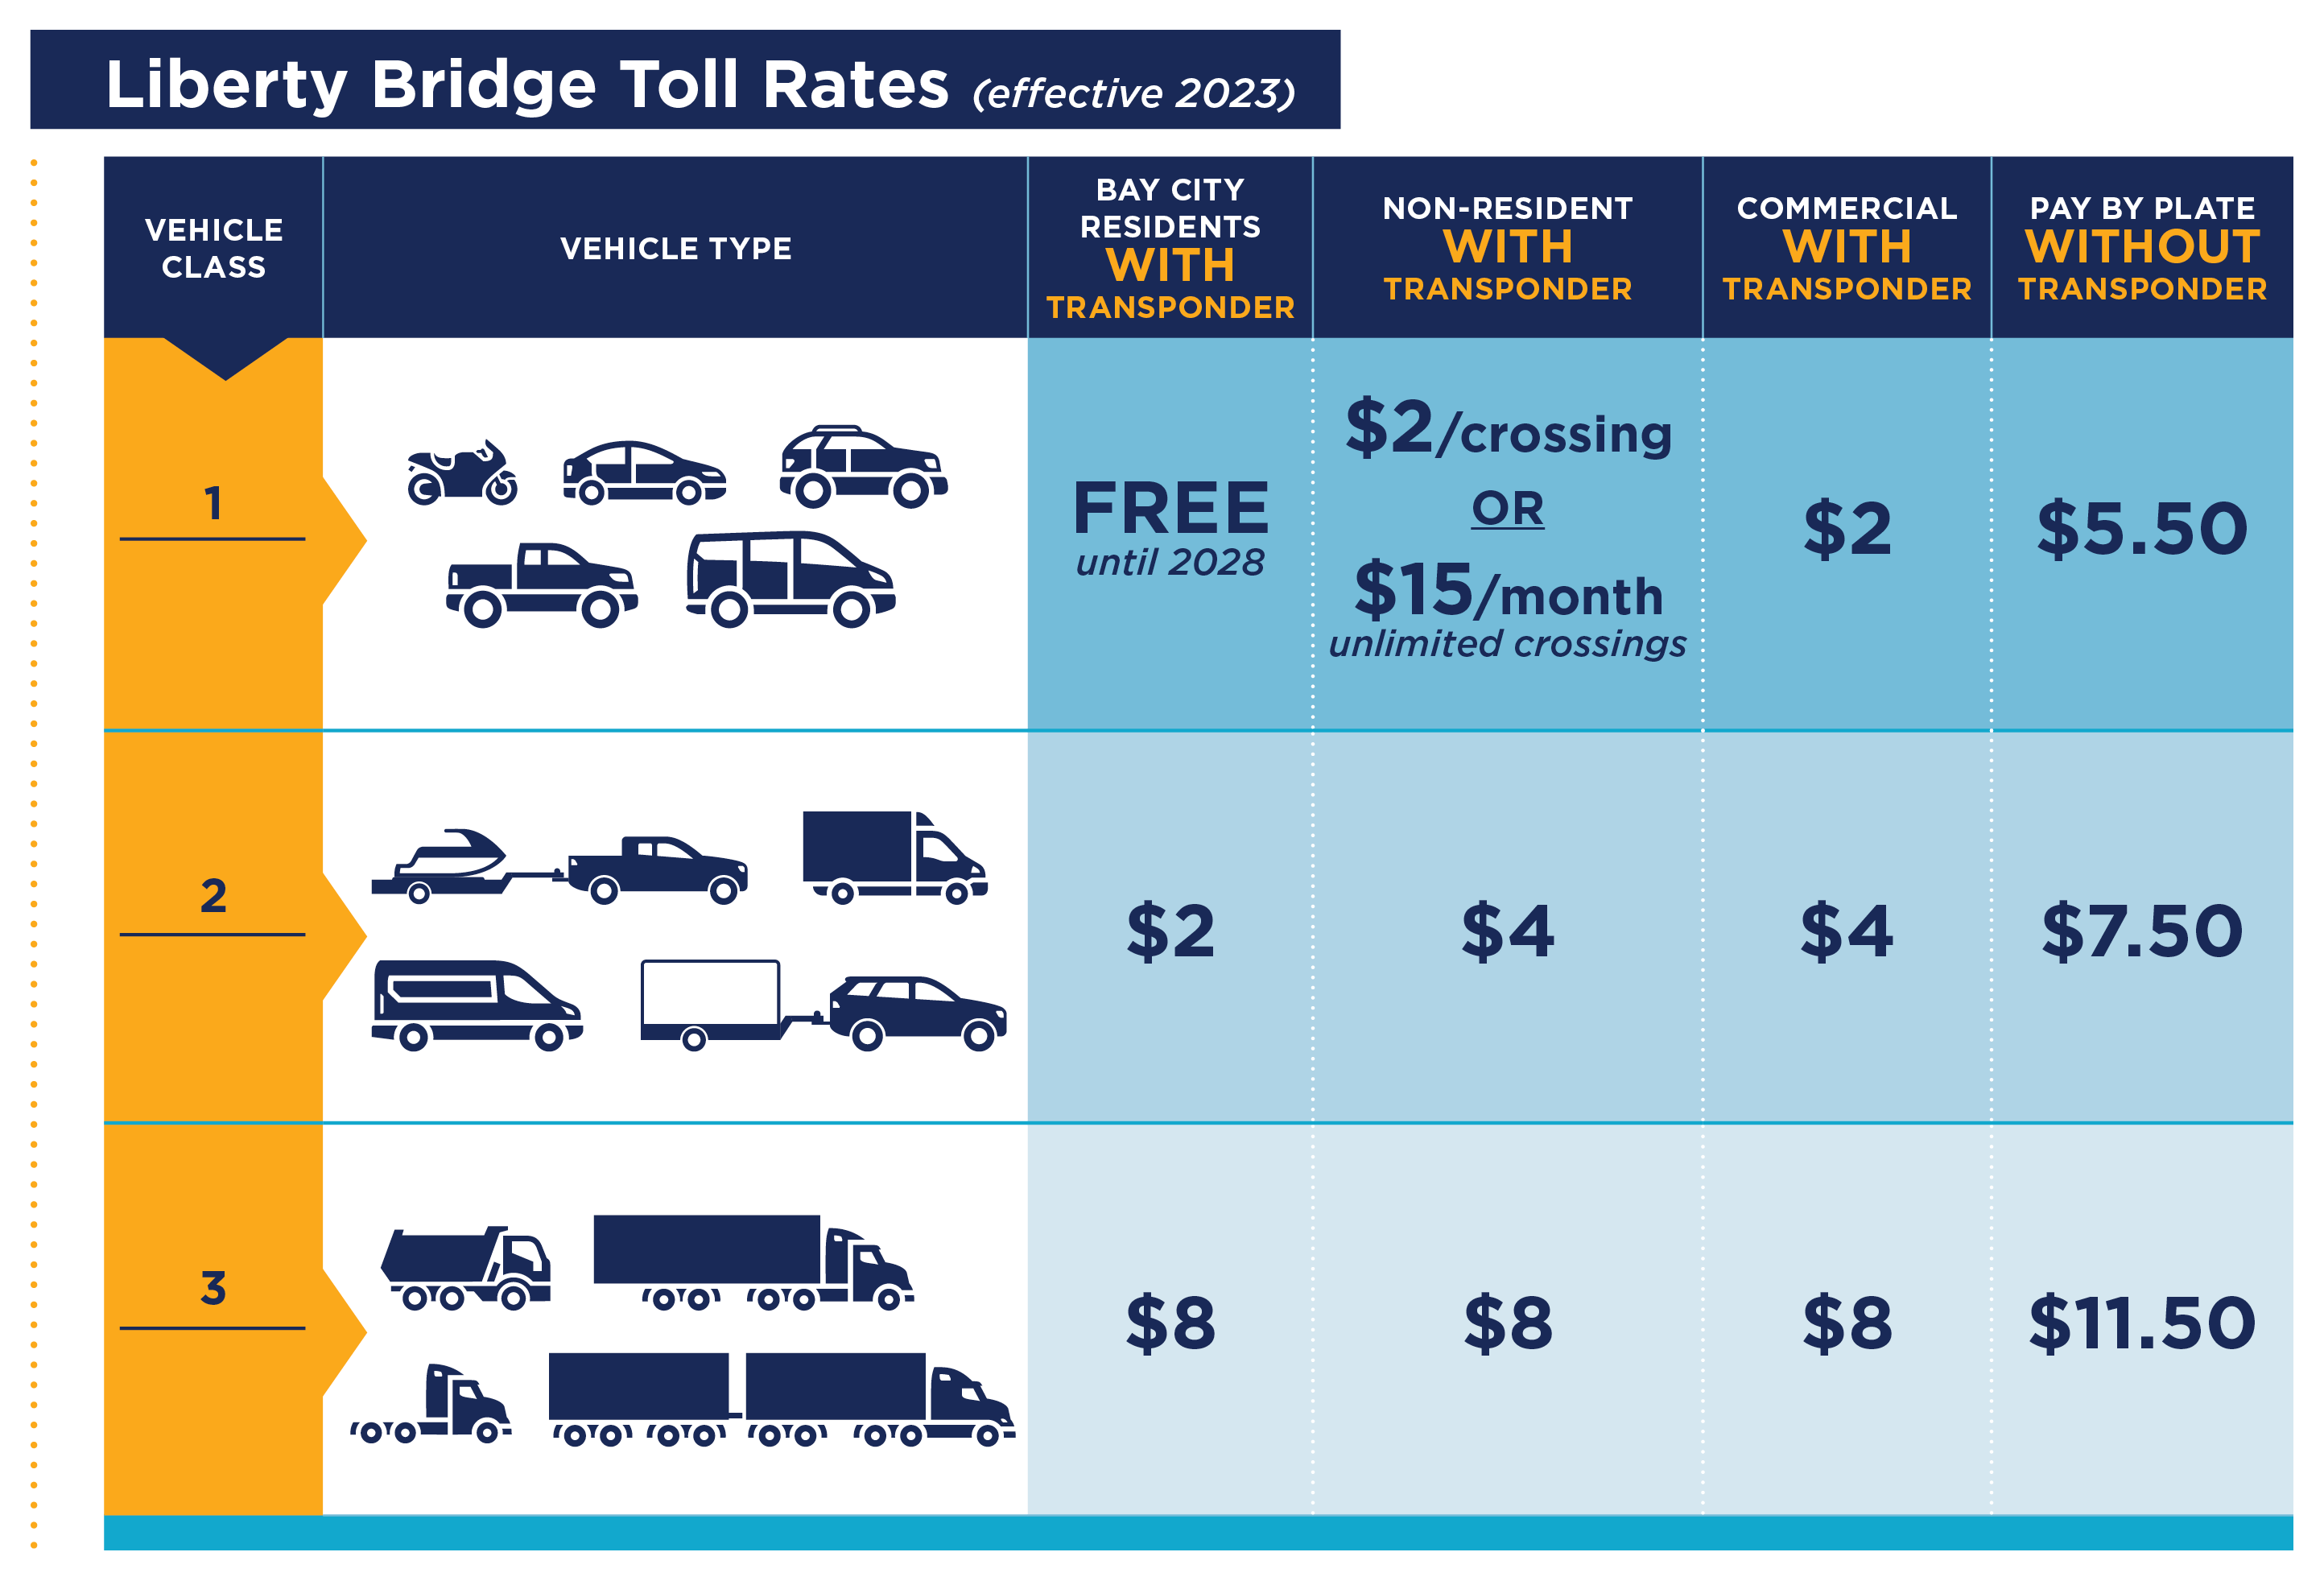 Liberty Bridge Toll Rate